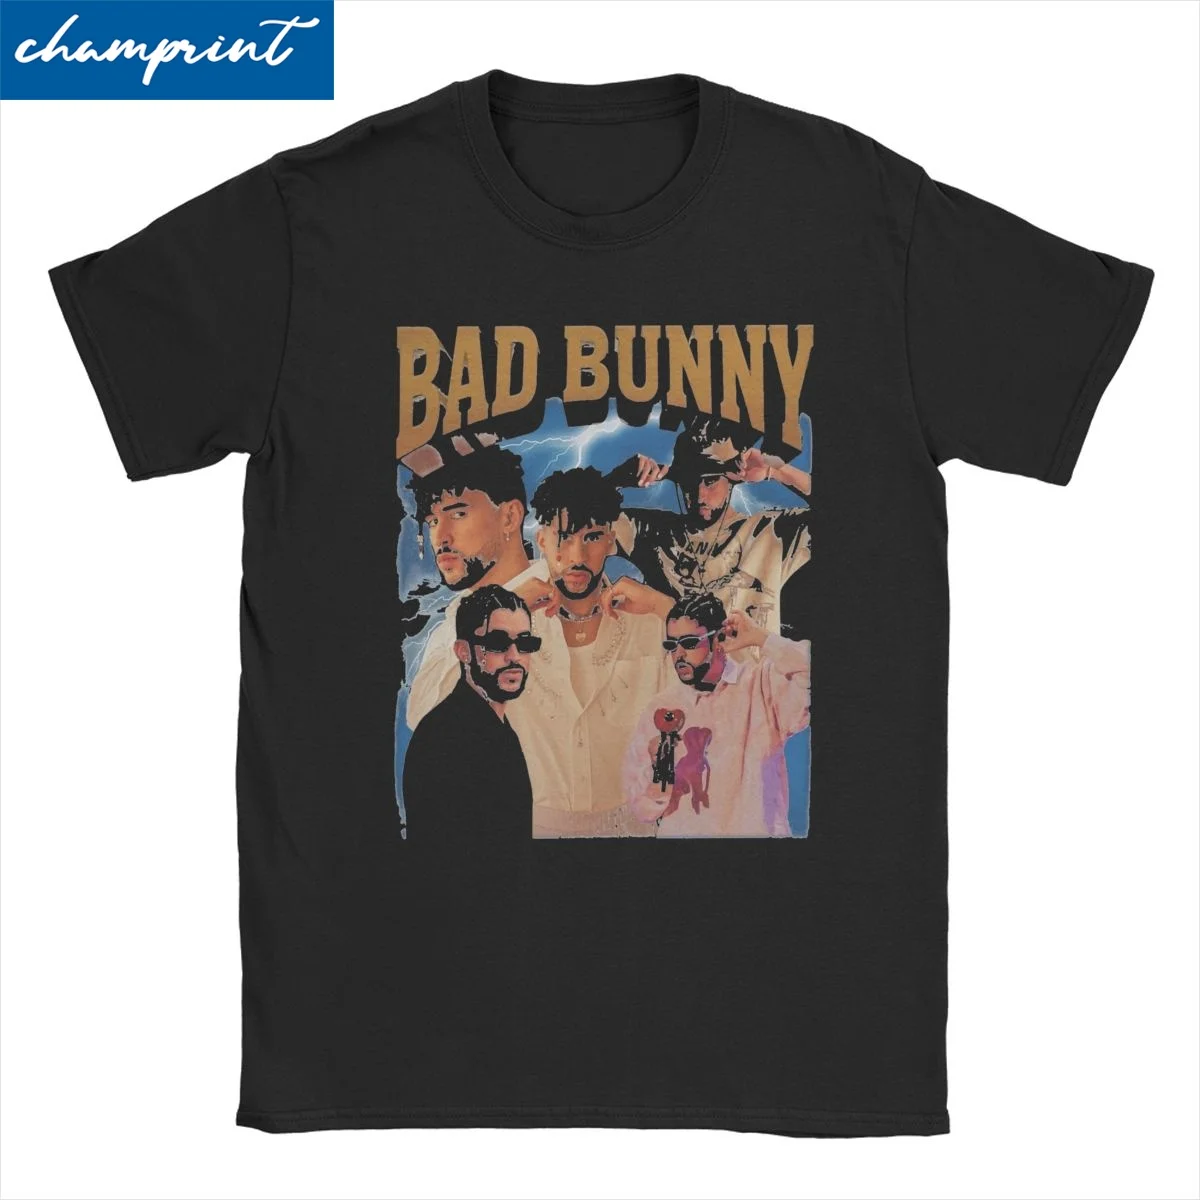 Fun Rapper Music Album T-Shirt Men Women's Round Collar 100% Cotton T Shirts Bad Bunny Short Sleeve Tee Shirt Gift Idea Clothes